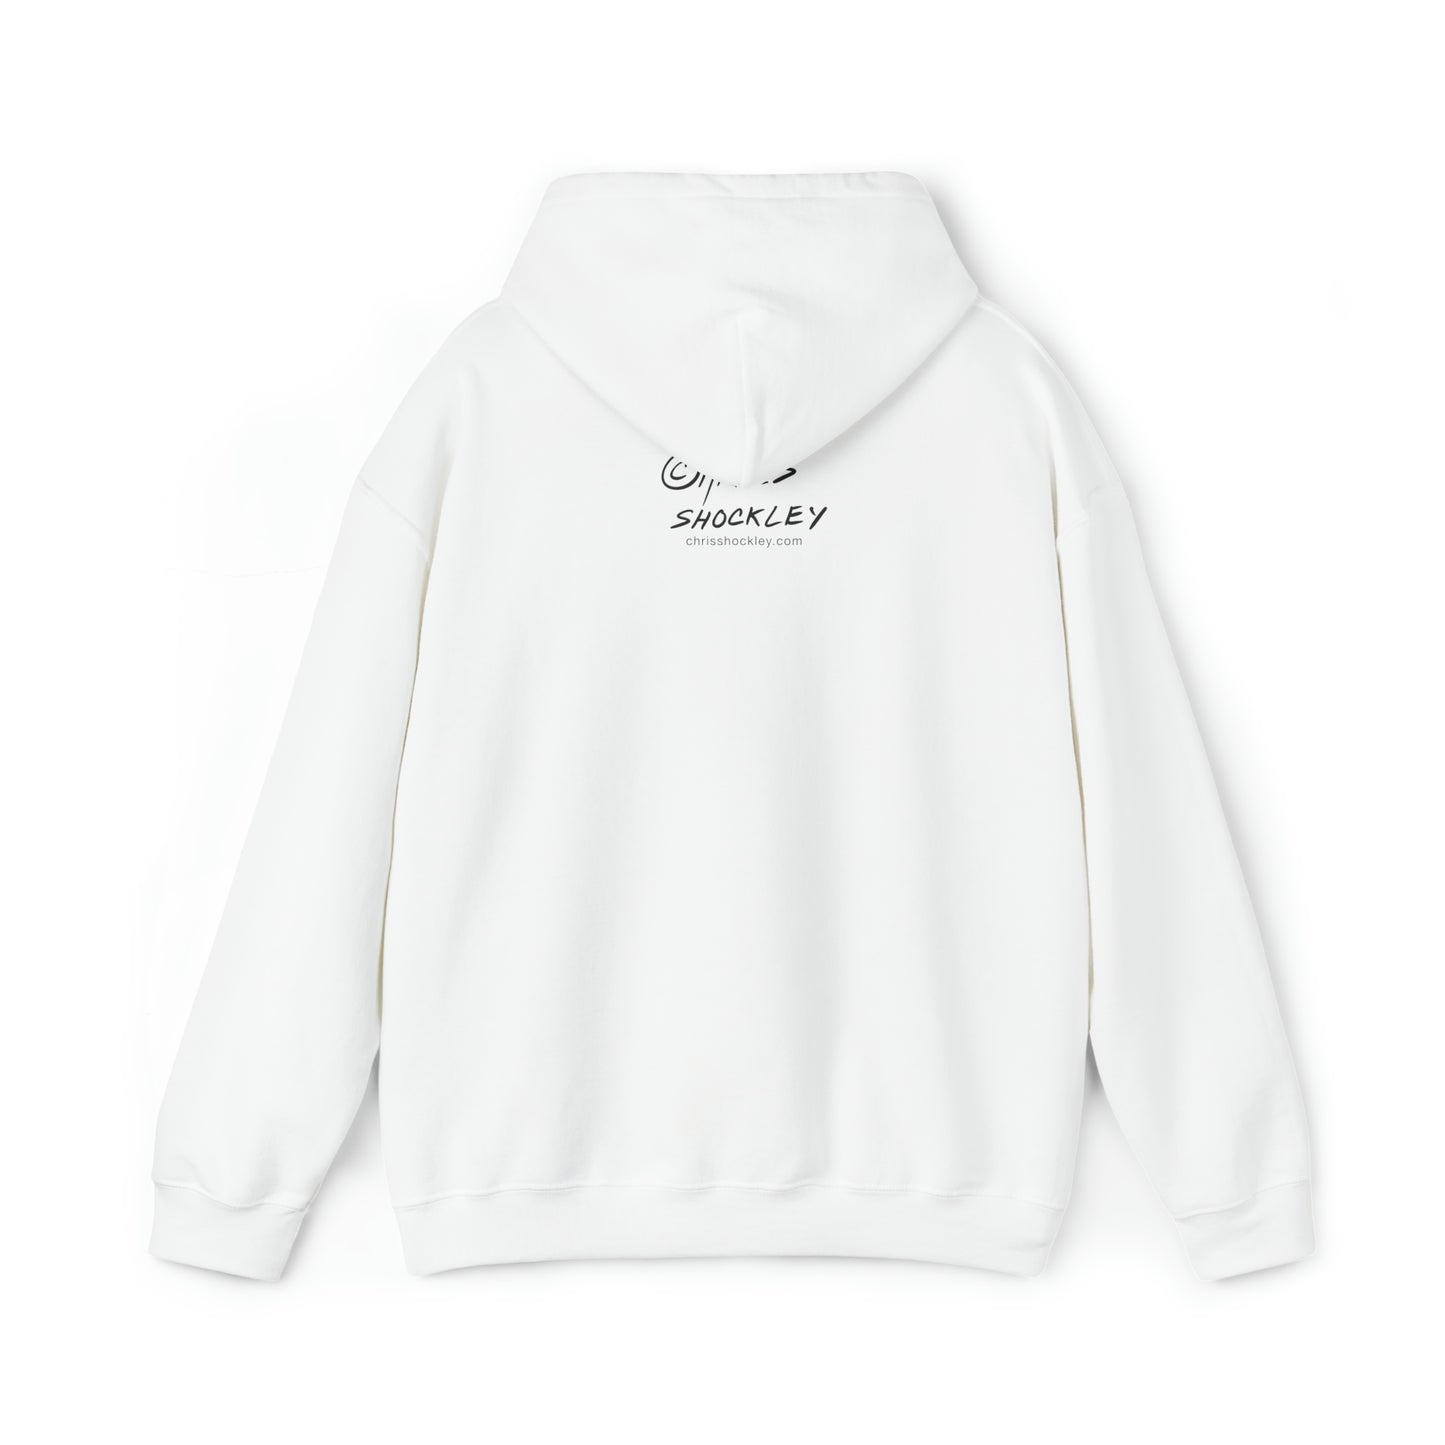 Love Sick Panda - Unisex Heavy Blend™ Hooded Sweatshirt